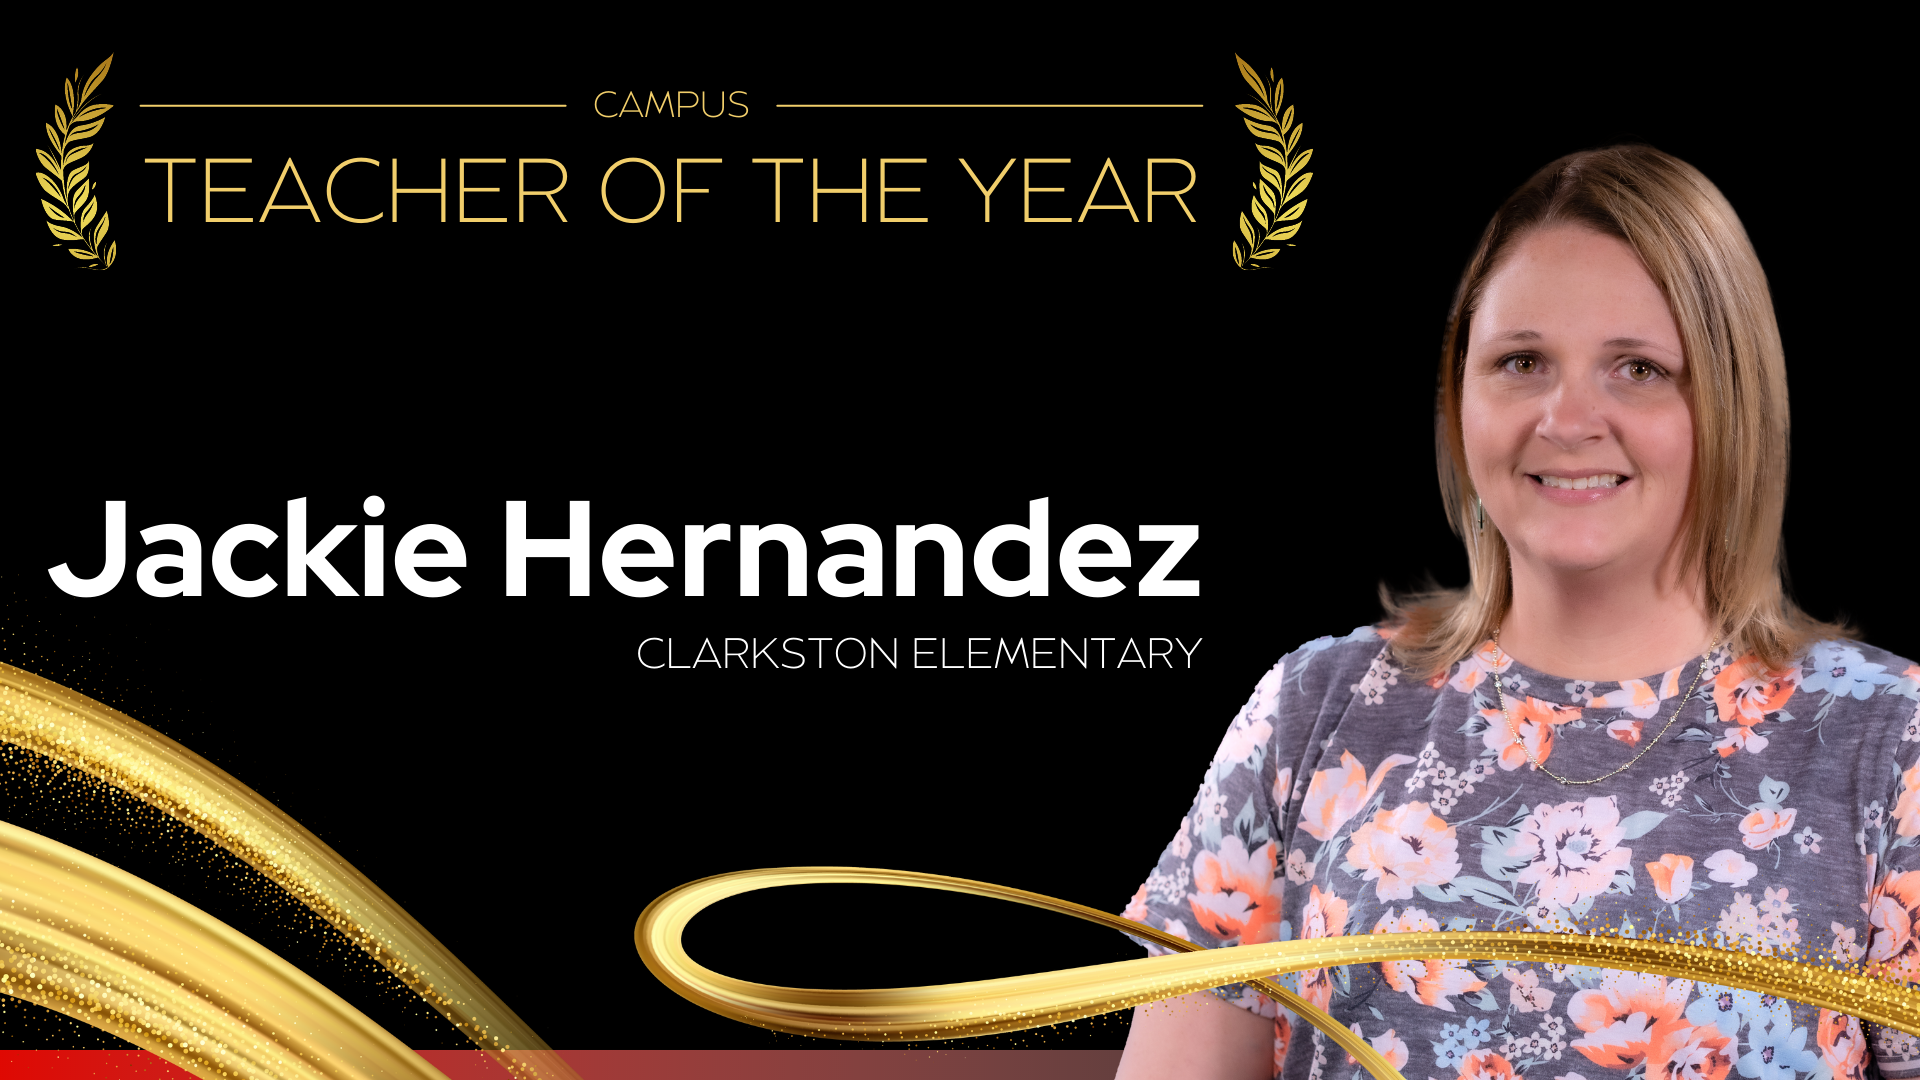 Campus Teacher of the Year Jackie Hernandez - Clarkston Elementary